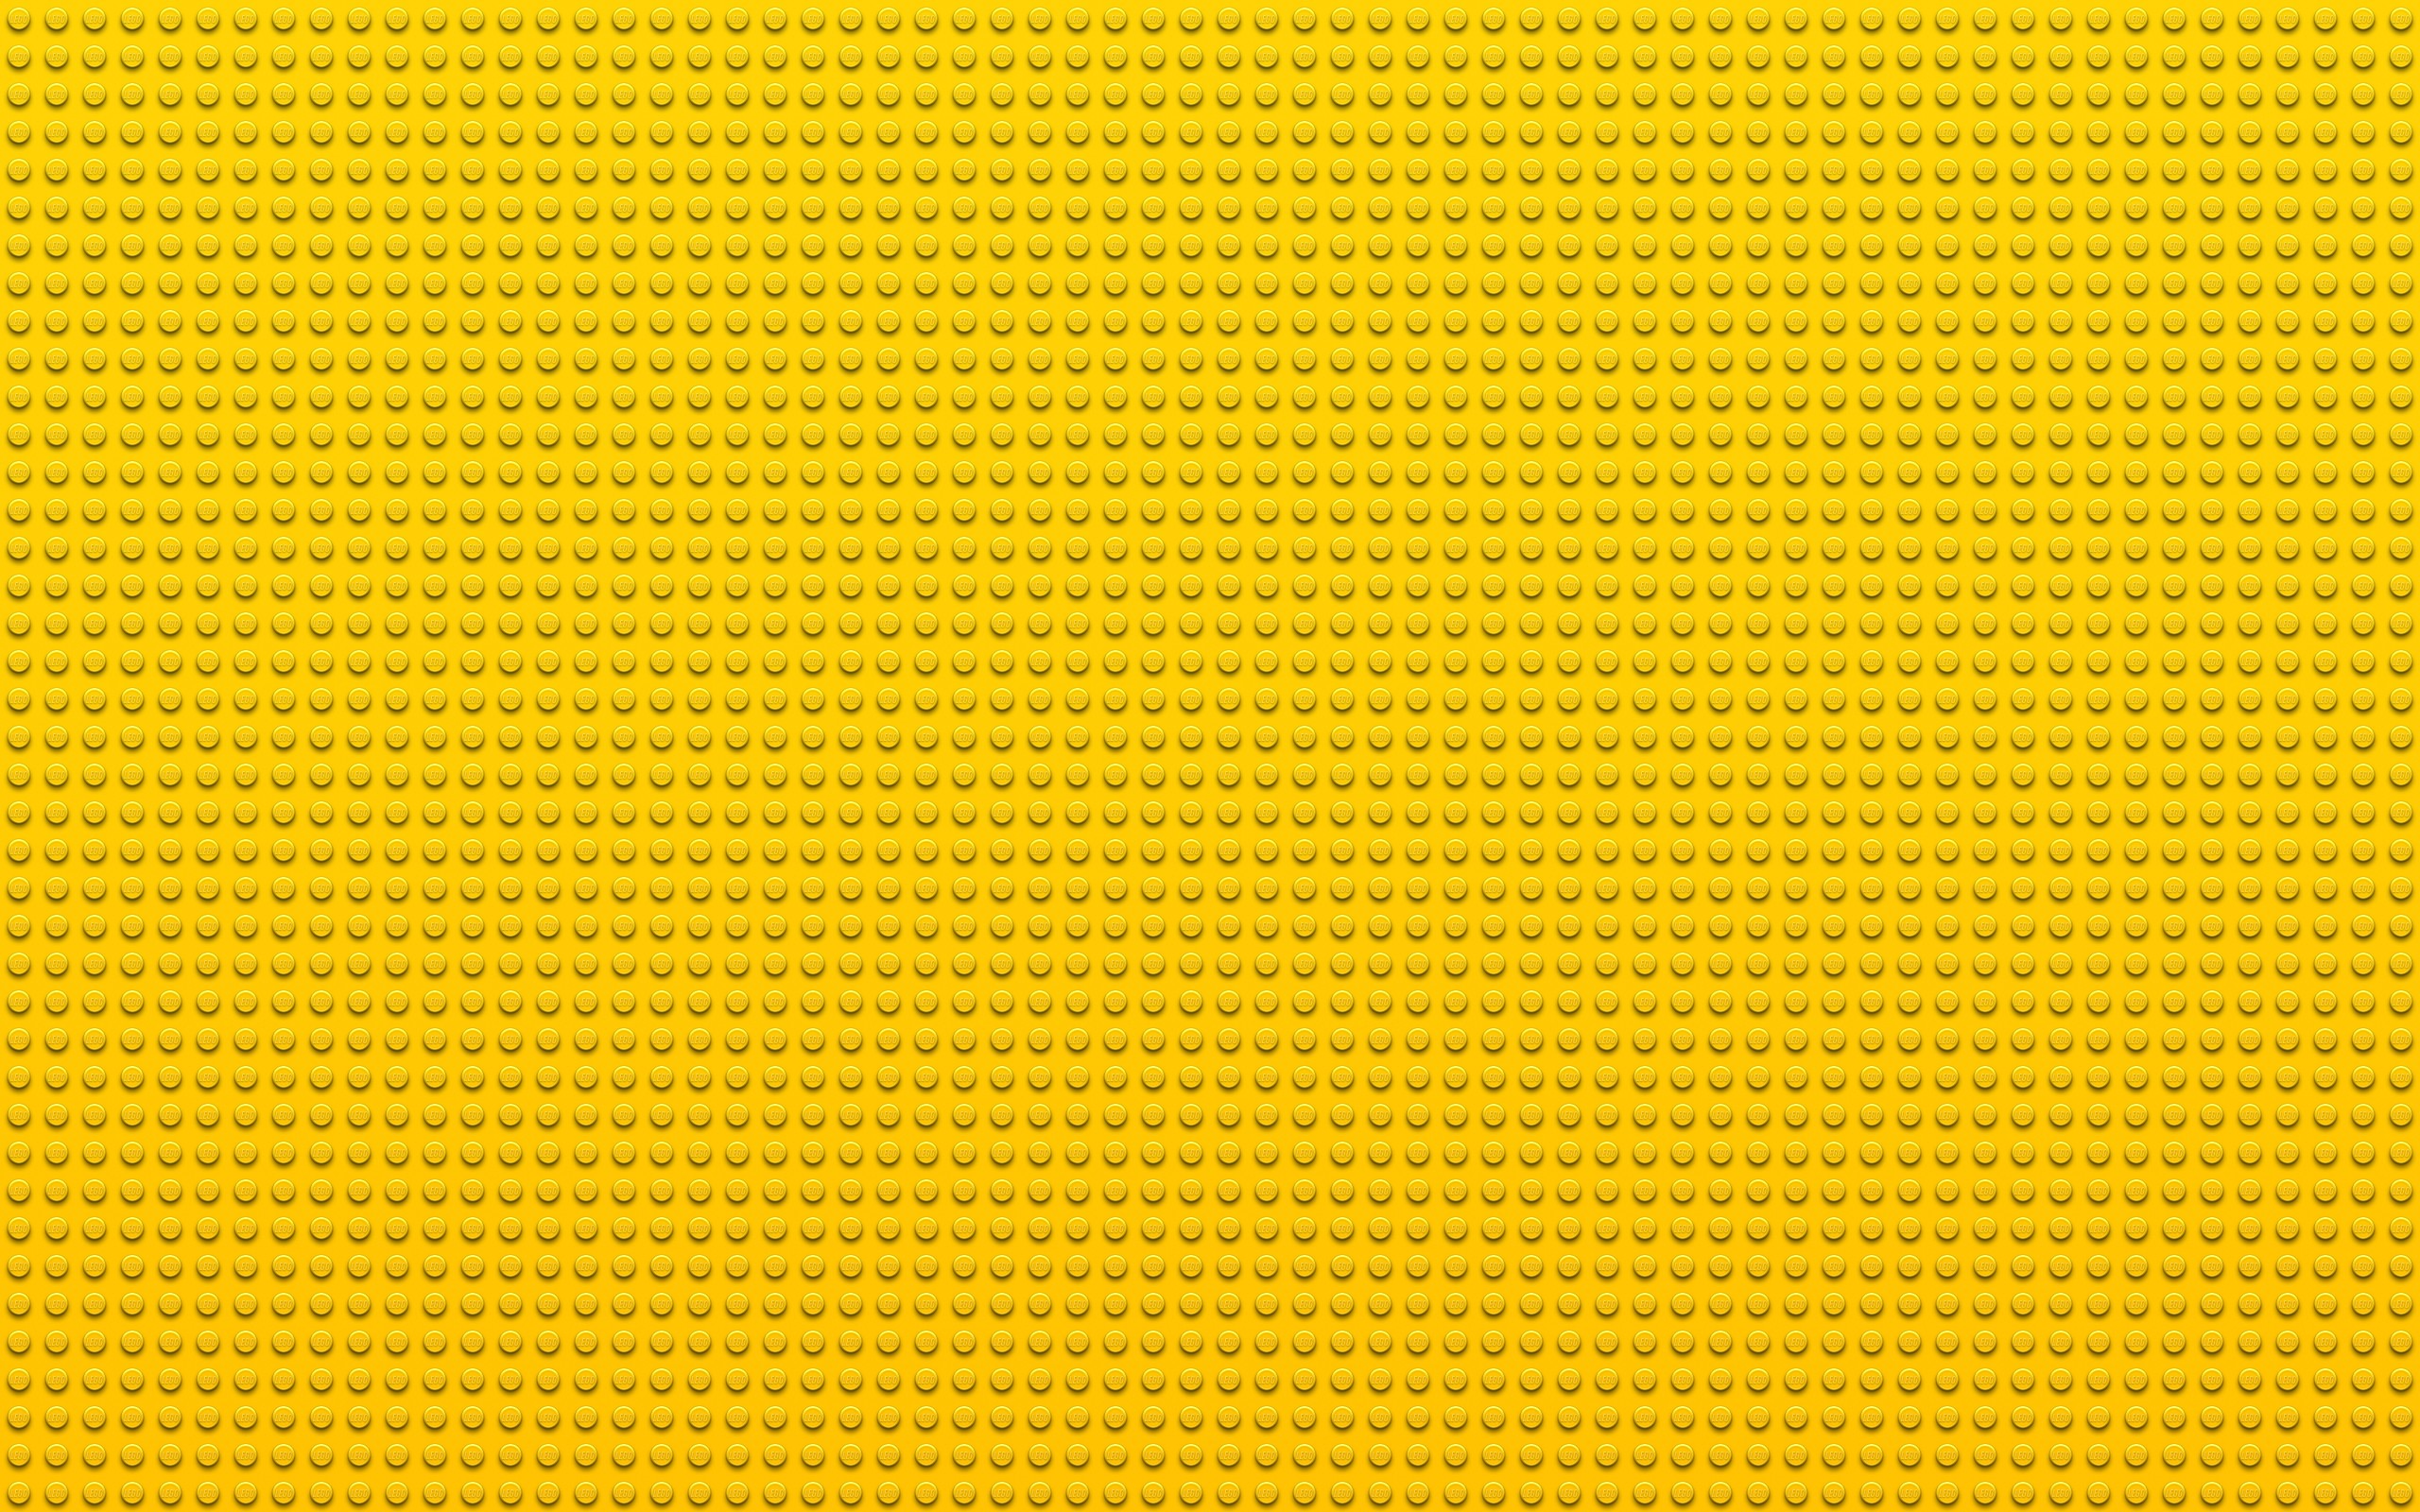 Lego Yellow Wallpaper 2560x1600 Lego Yellow Textures Dots 2560x1600